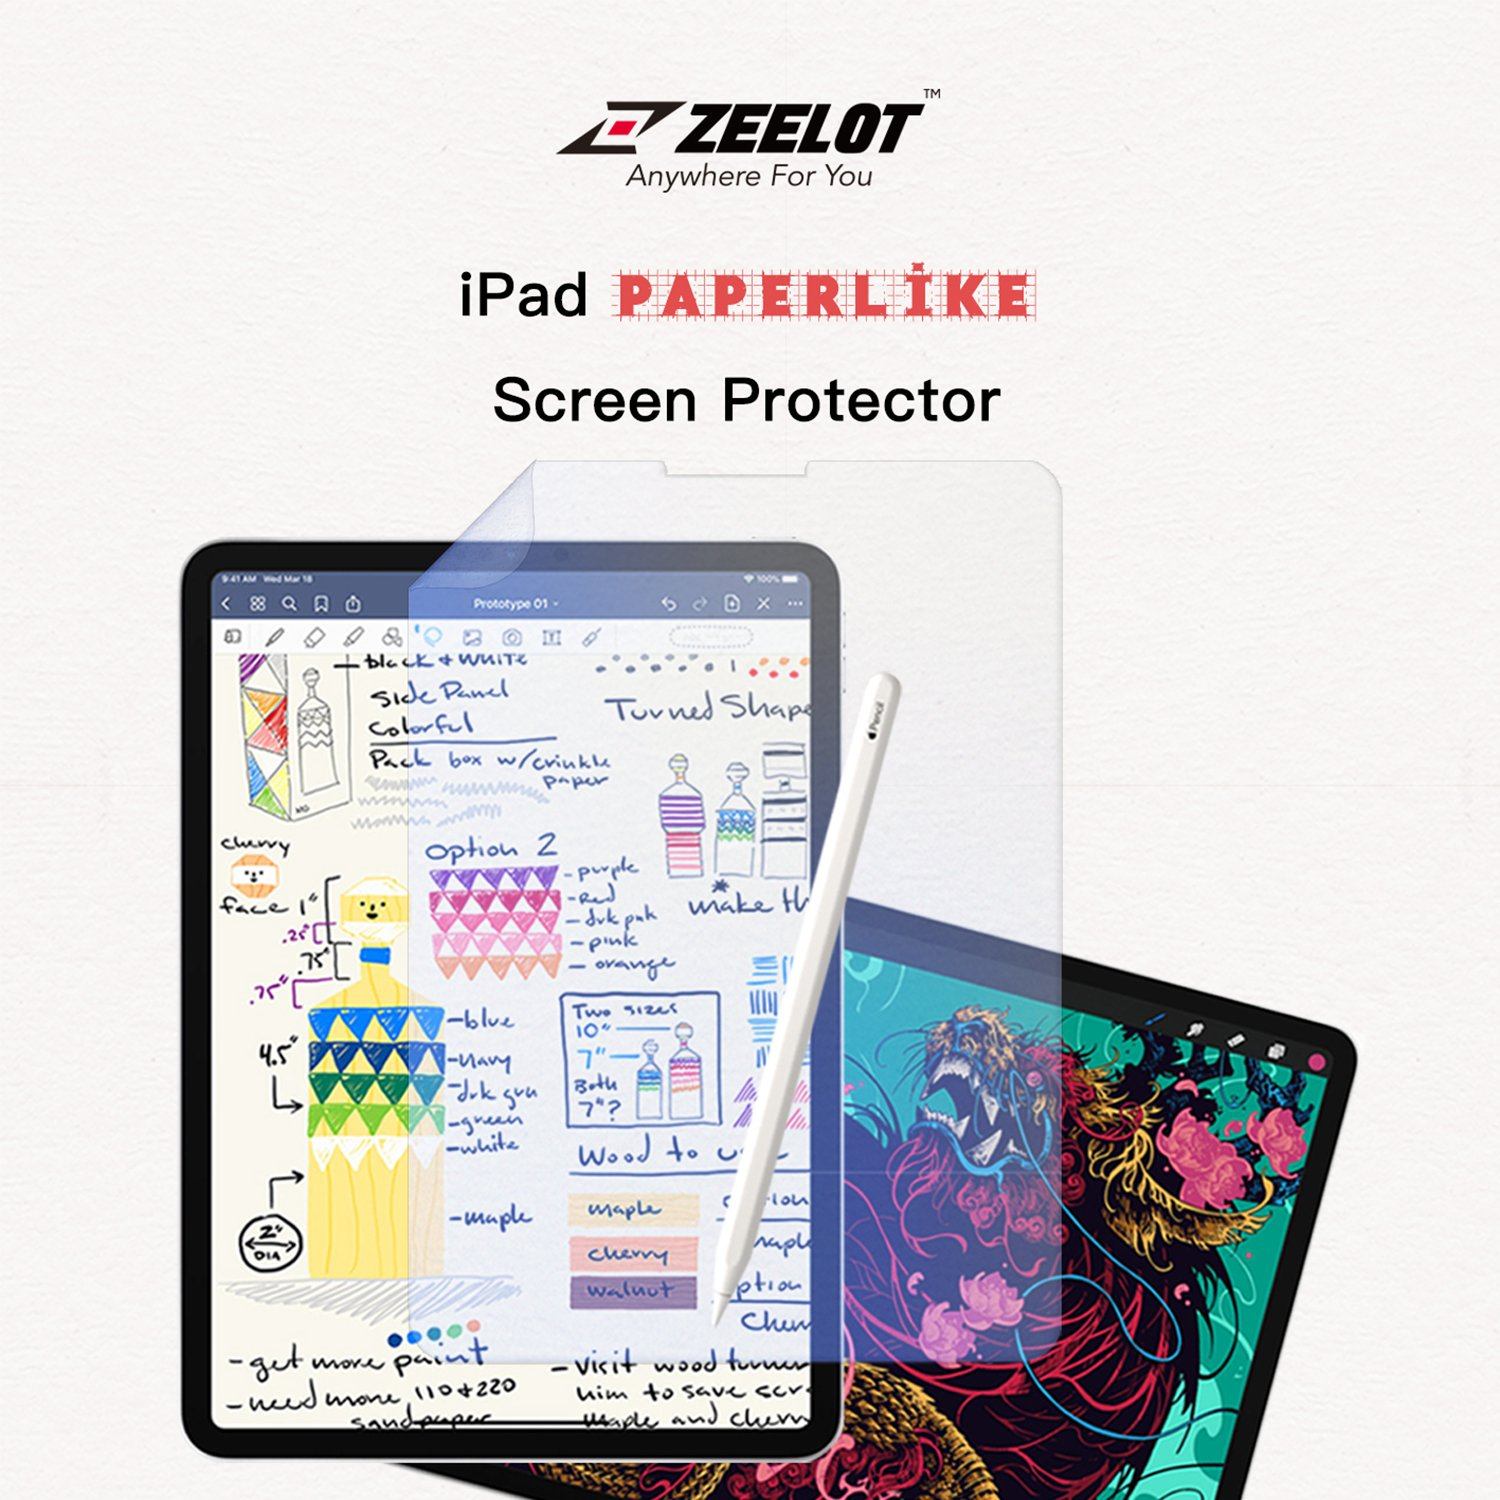 ZEELOT Anti Blue Ray Paper Like Screen Protector for iPad 10.2" (2020/2019) Default Zeelot 